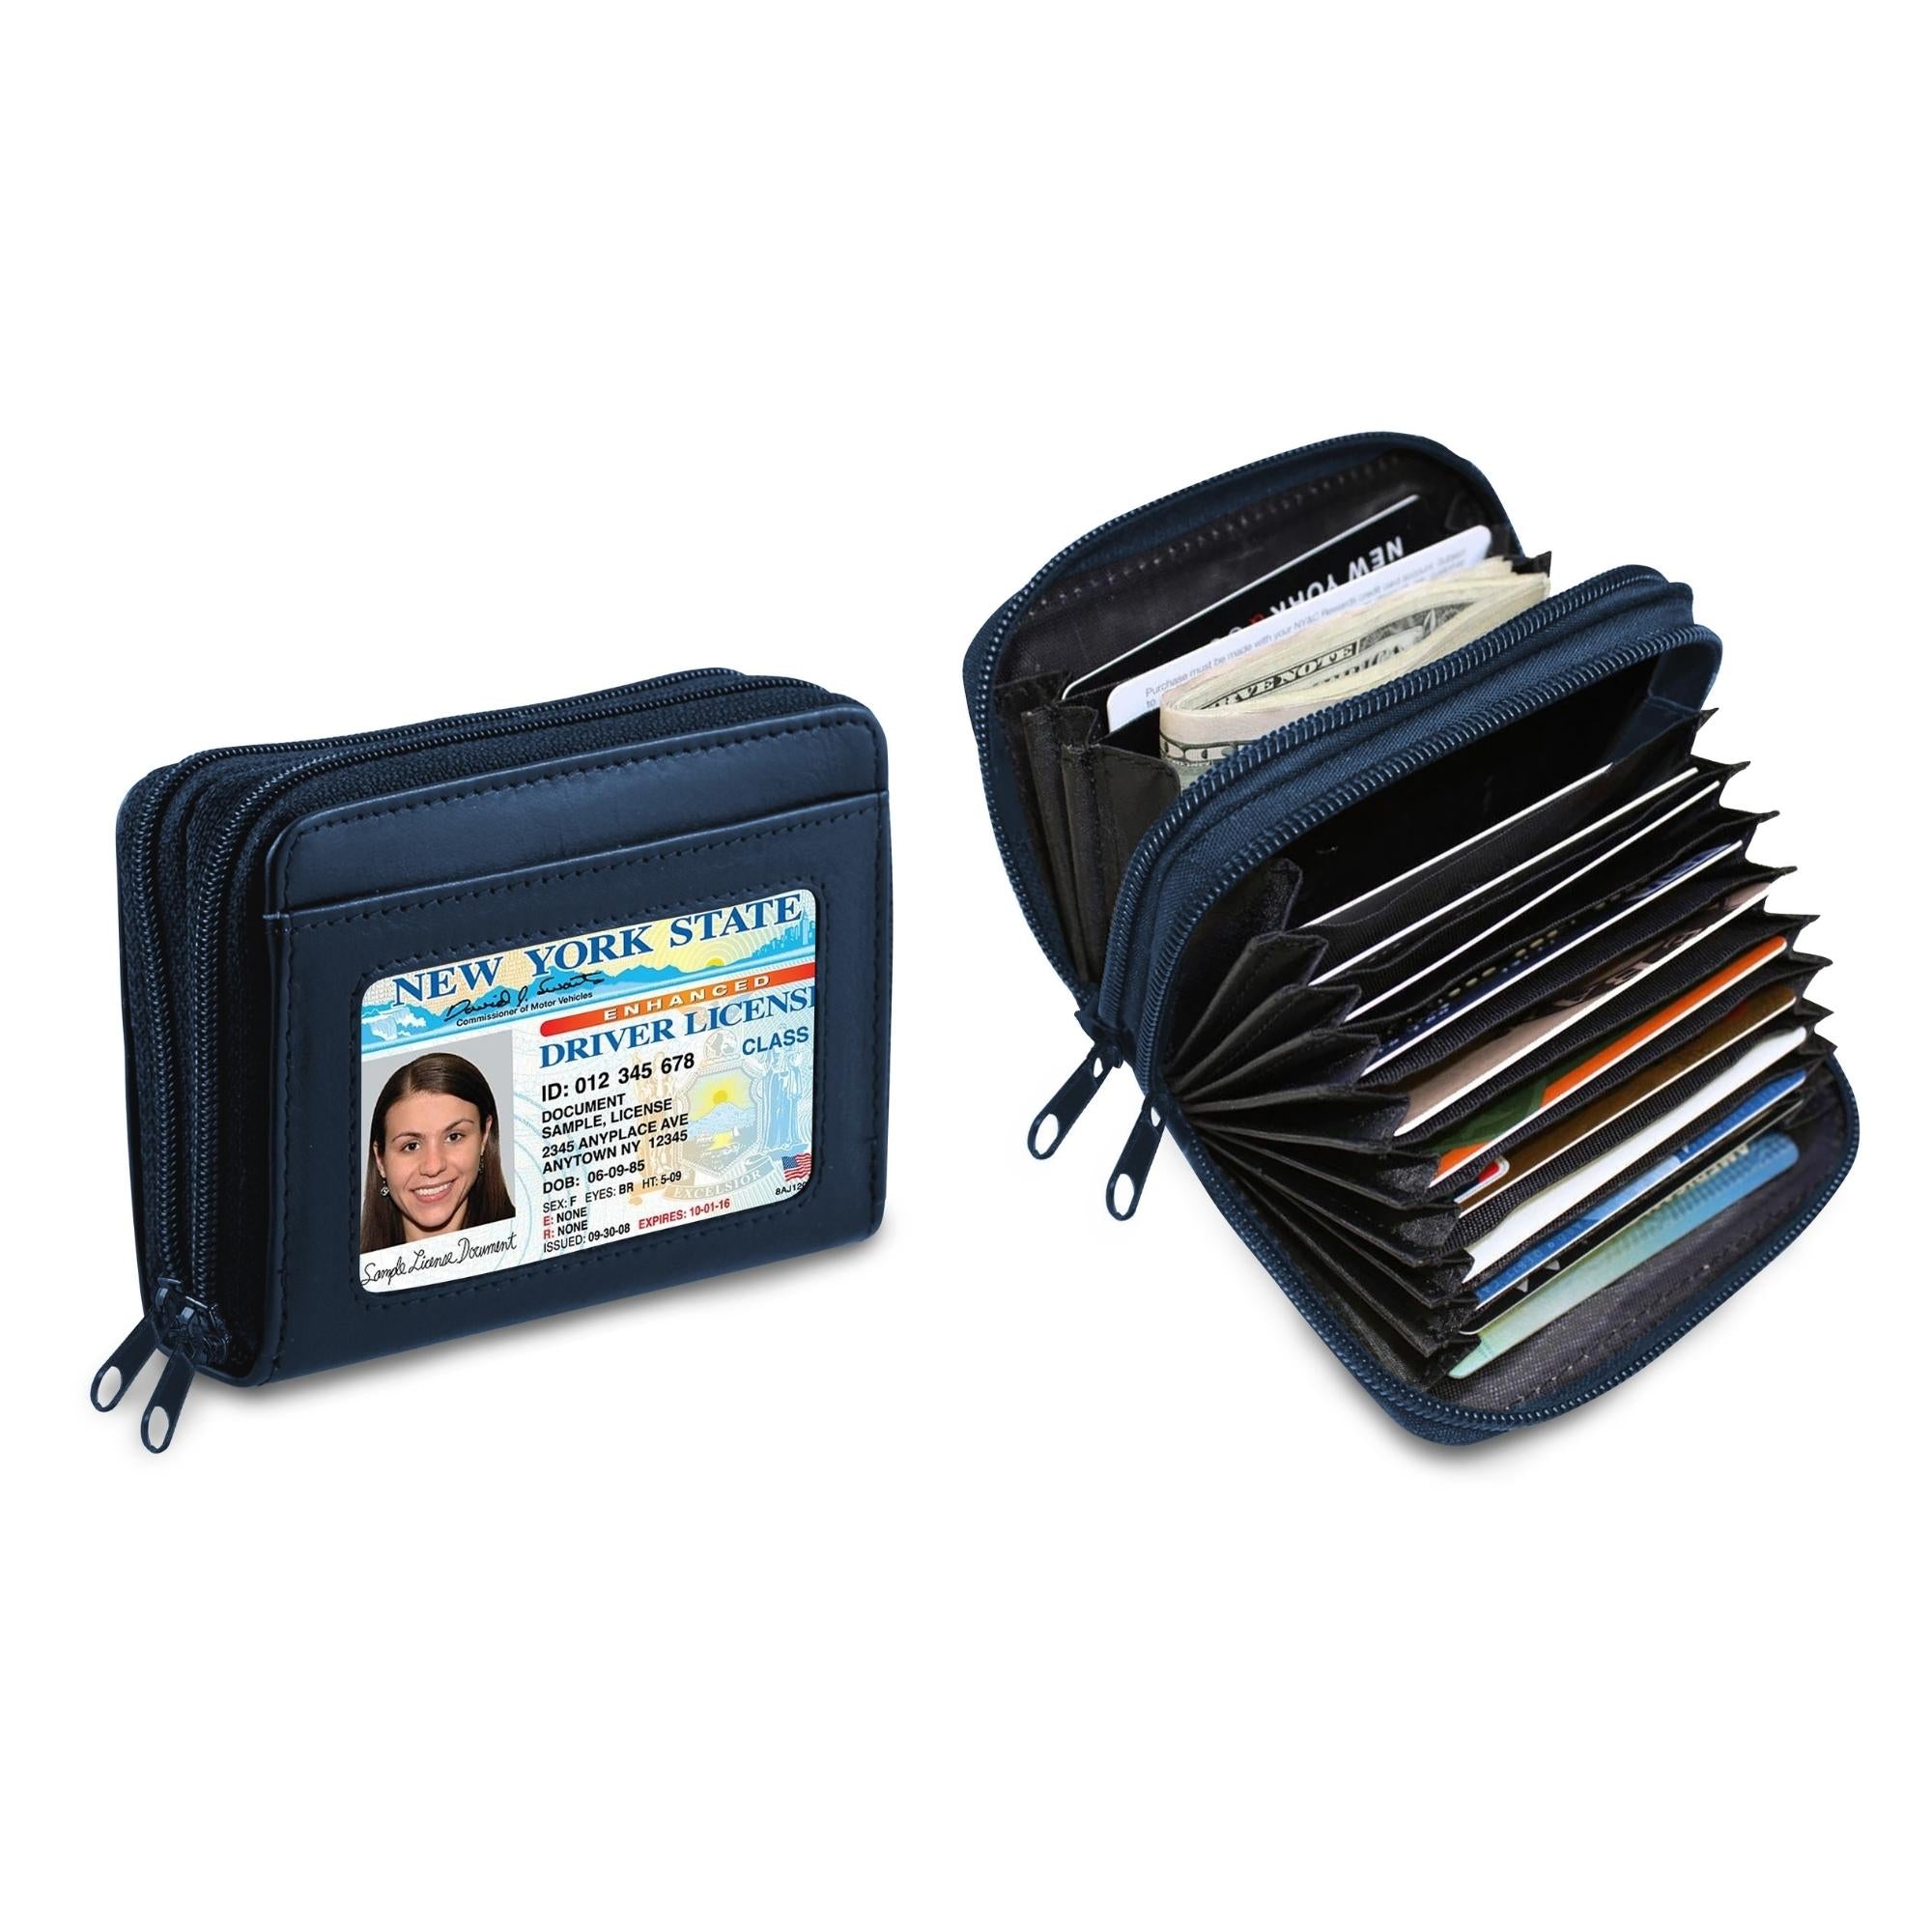 Premium Leather Credit Card Holder & Wallet